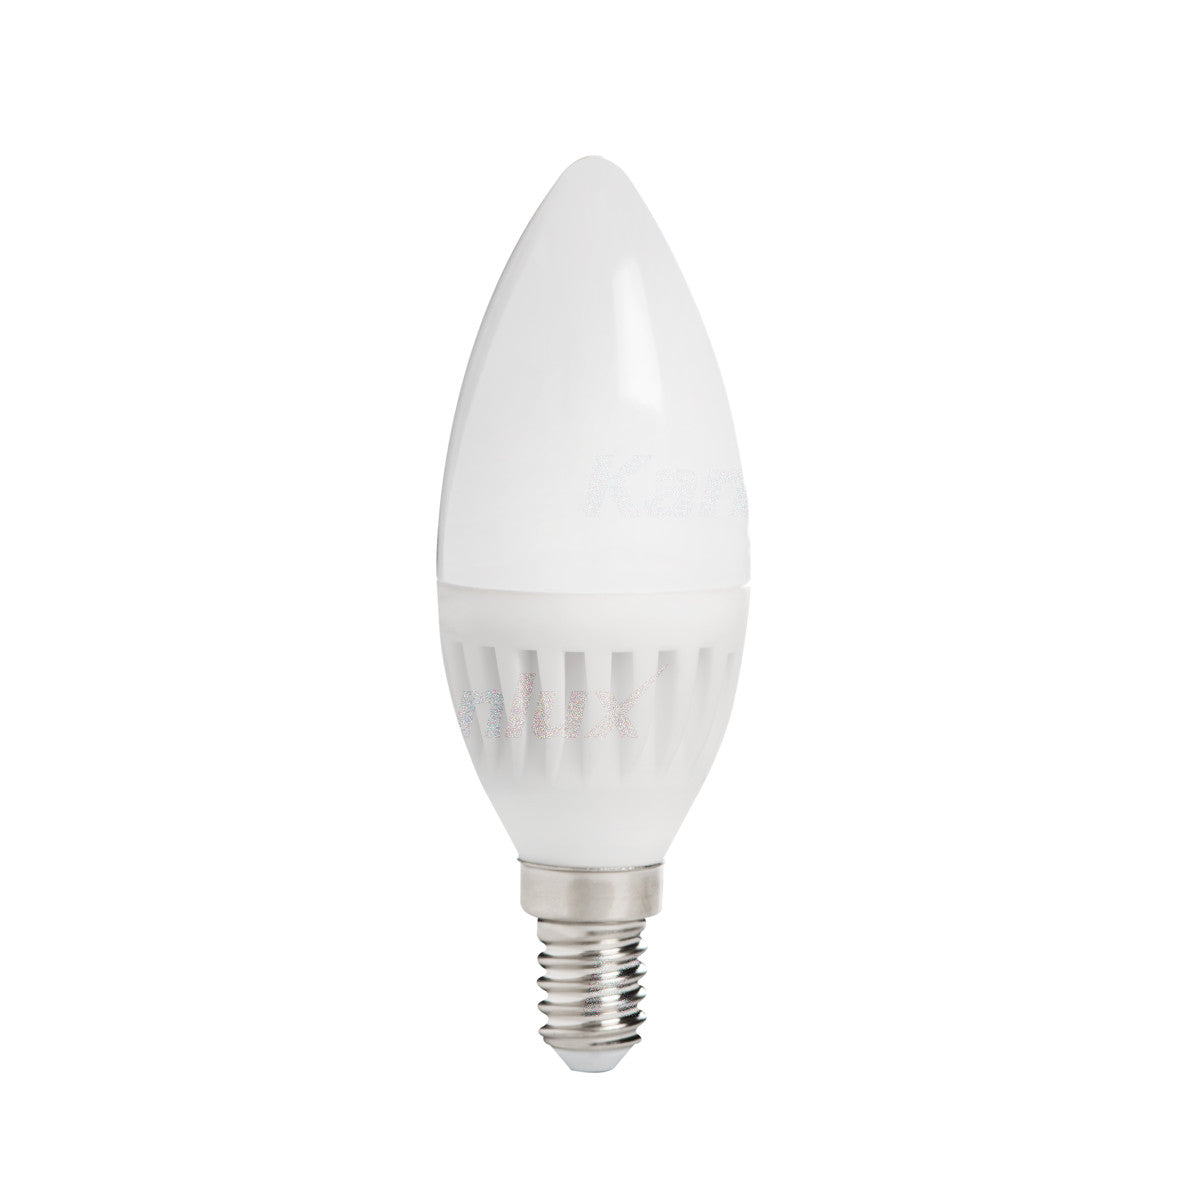 Kanlux DUN High Lumen 8W E14 LED Candle Light Bulb Lamp Energy Saving SES